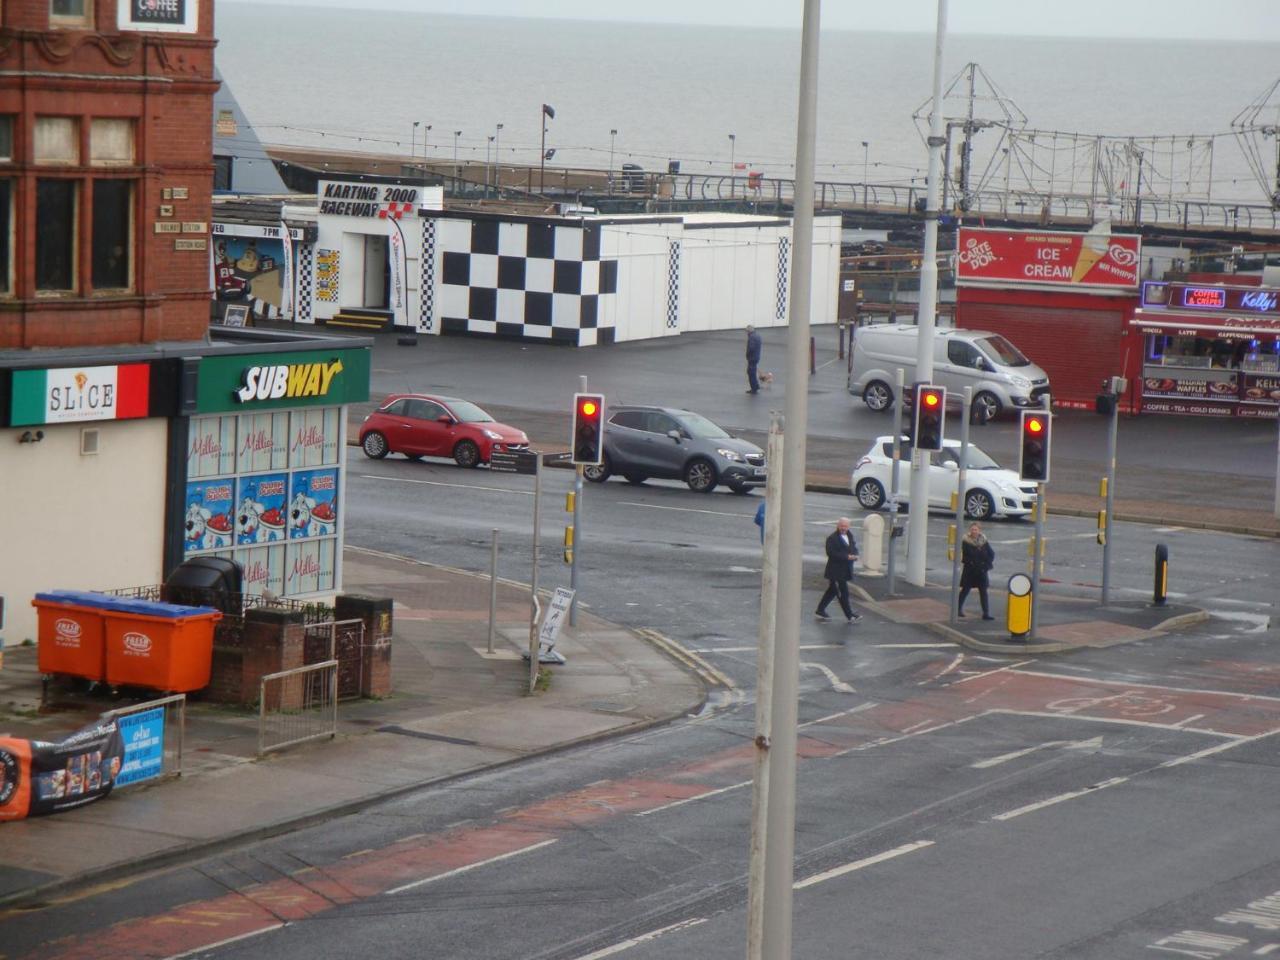 The Sandhurst Hotel Blackpool Exterior photo